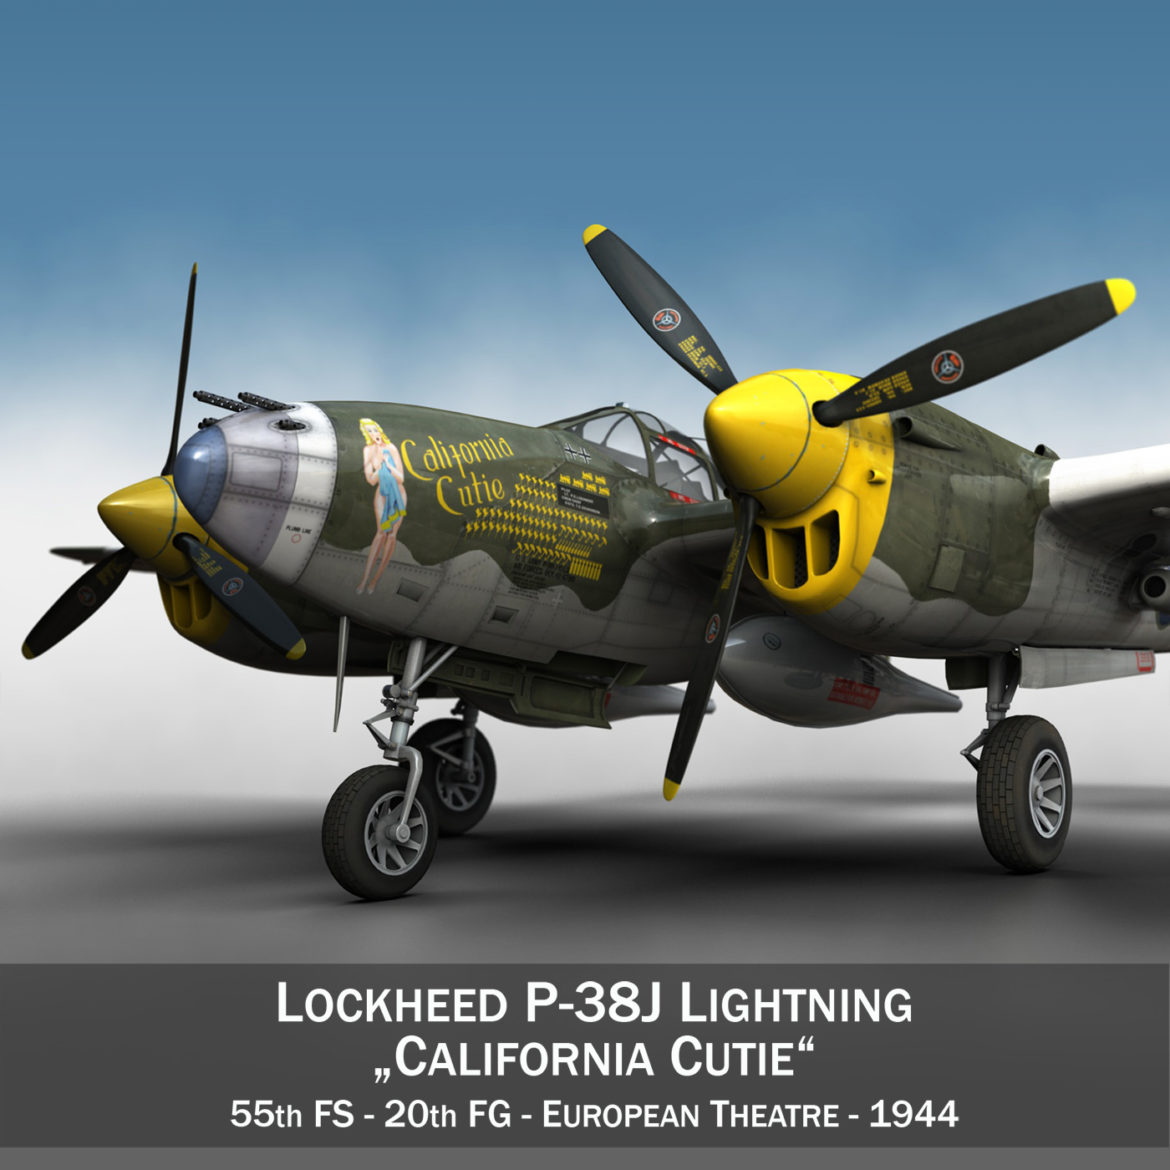 lockheed p-38 lightning – california cutie 3d model fbx lwo lw lws obj c4d 305133